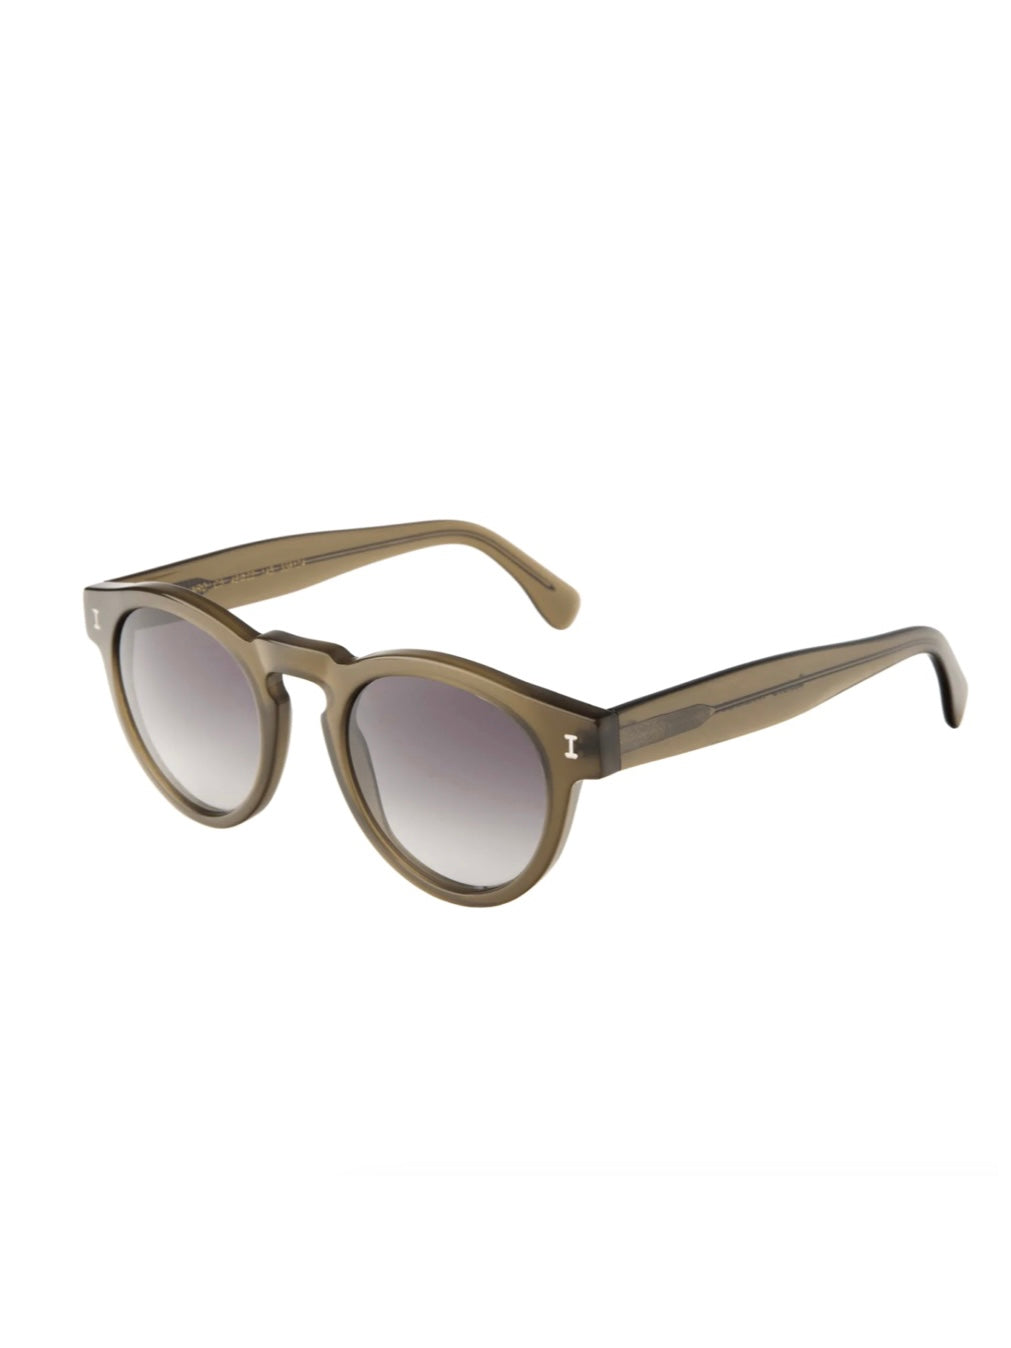 Leonard Sunglasses in Olive w/Grey Gradient